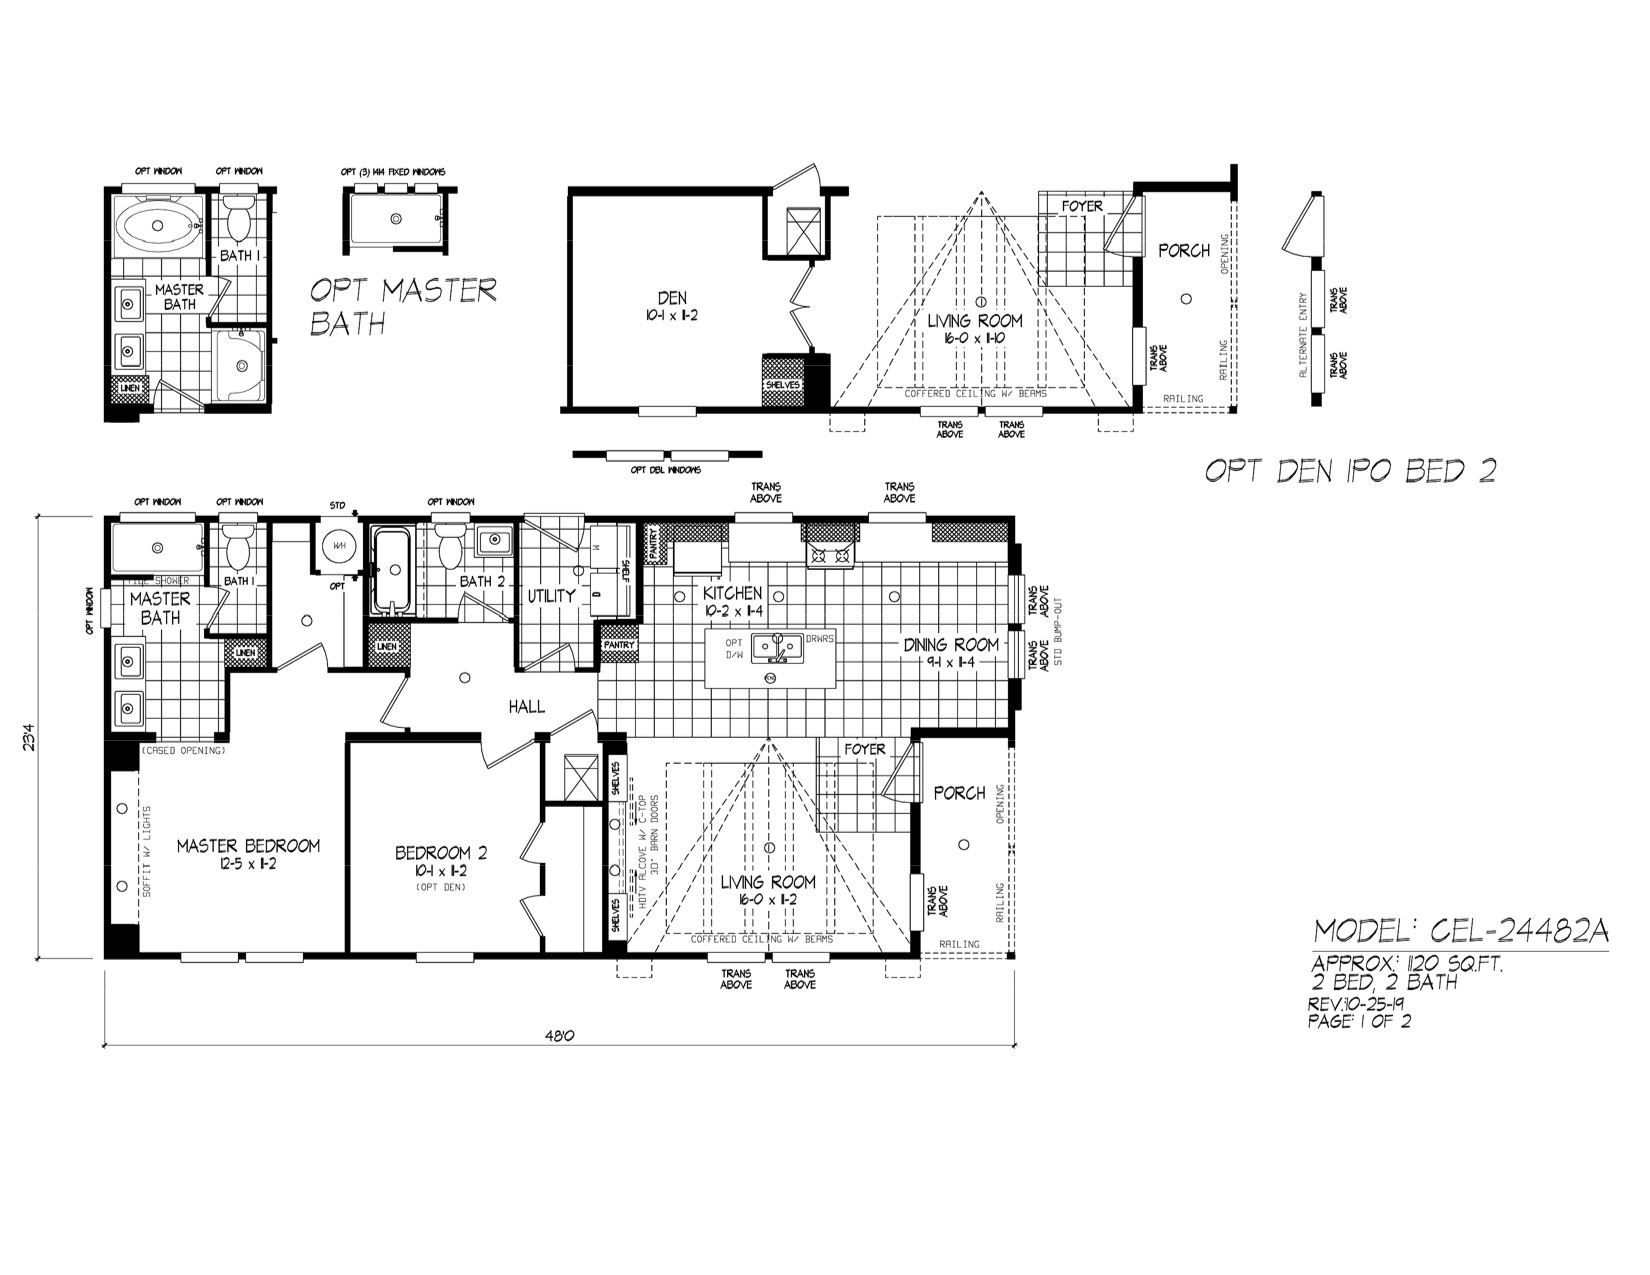 Homes Direct Modular Homes - Model CEL2448 - Floorplan